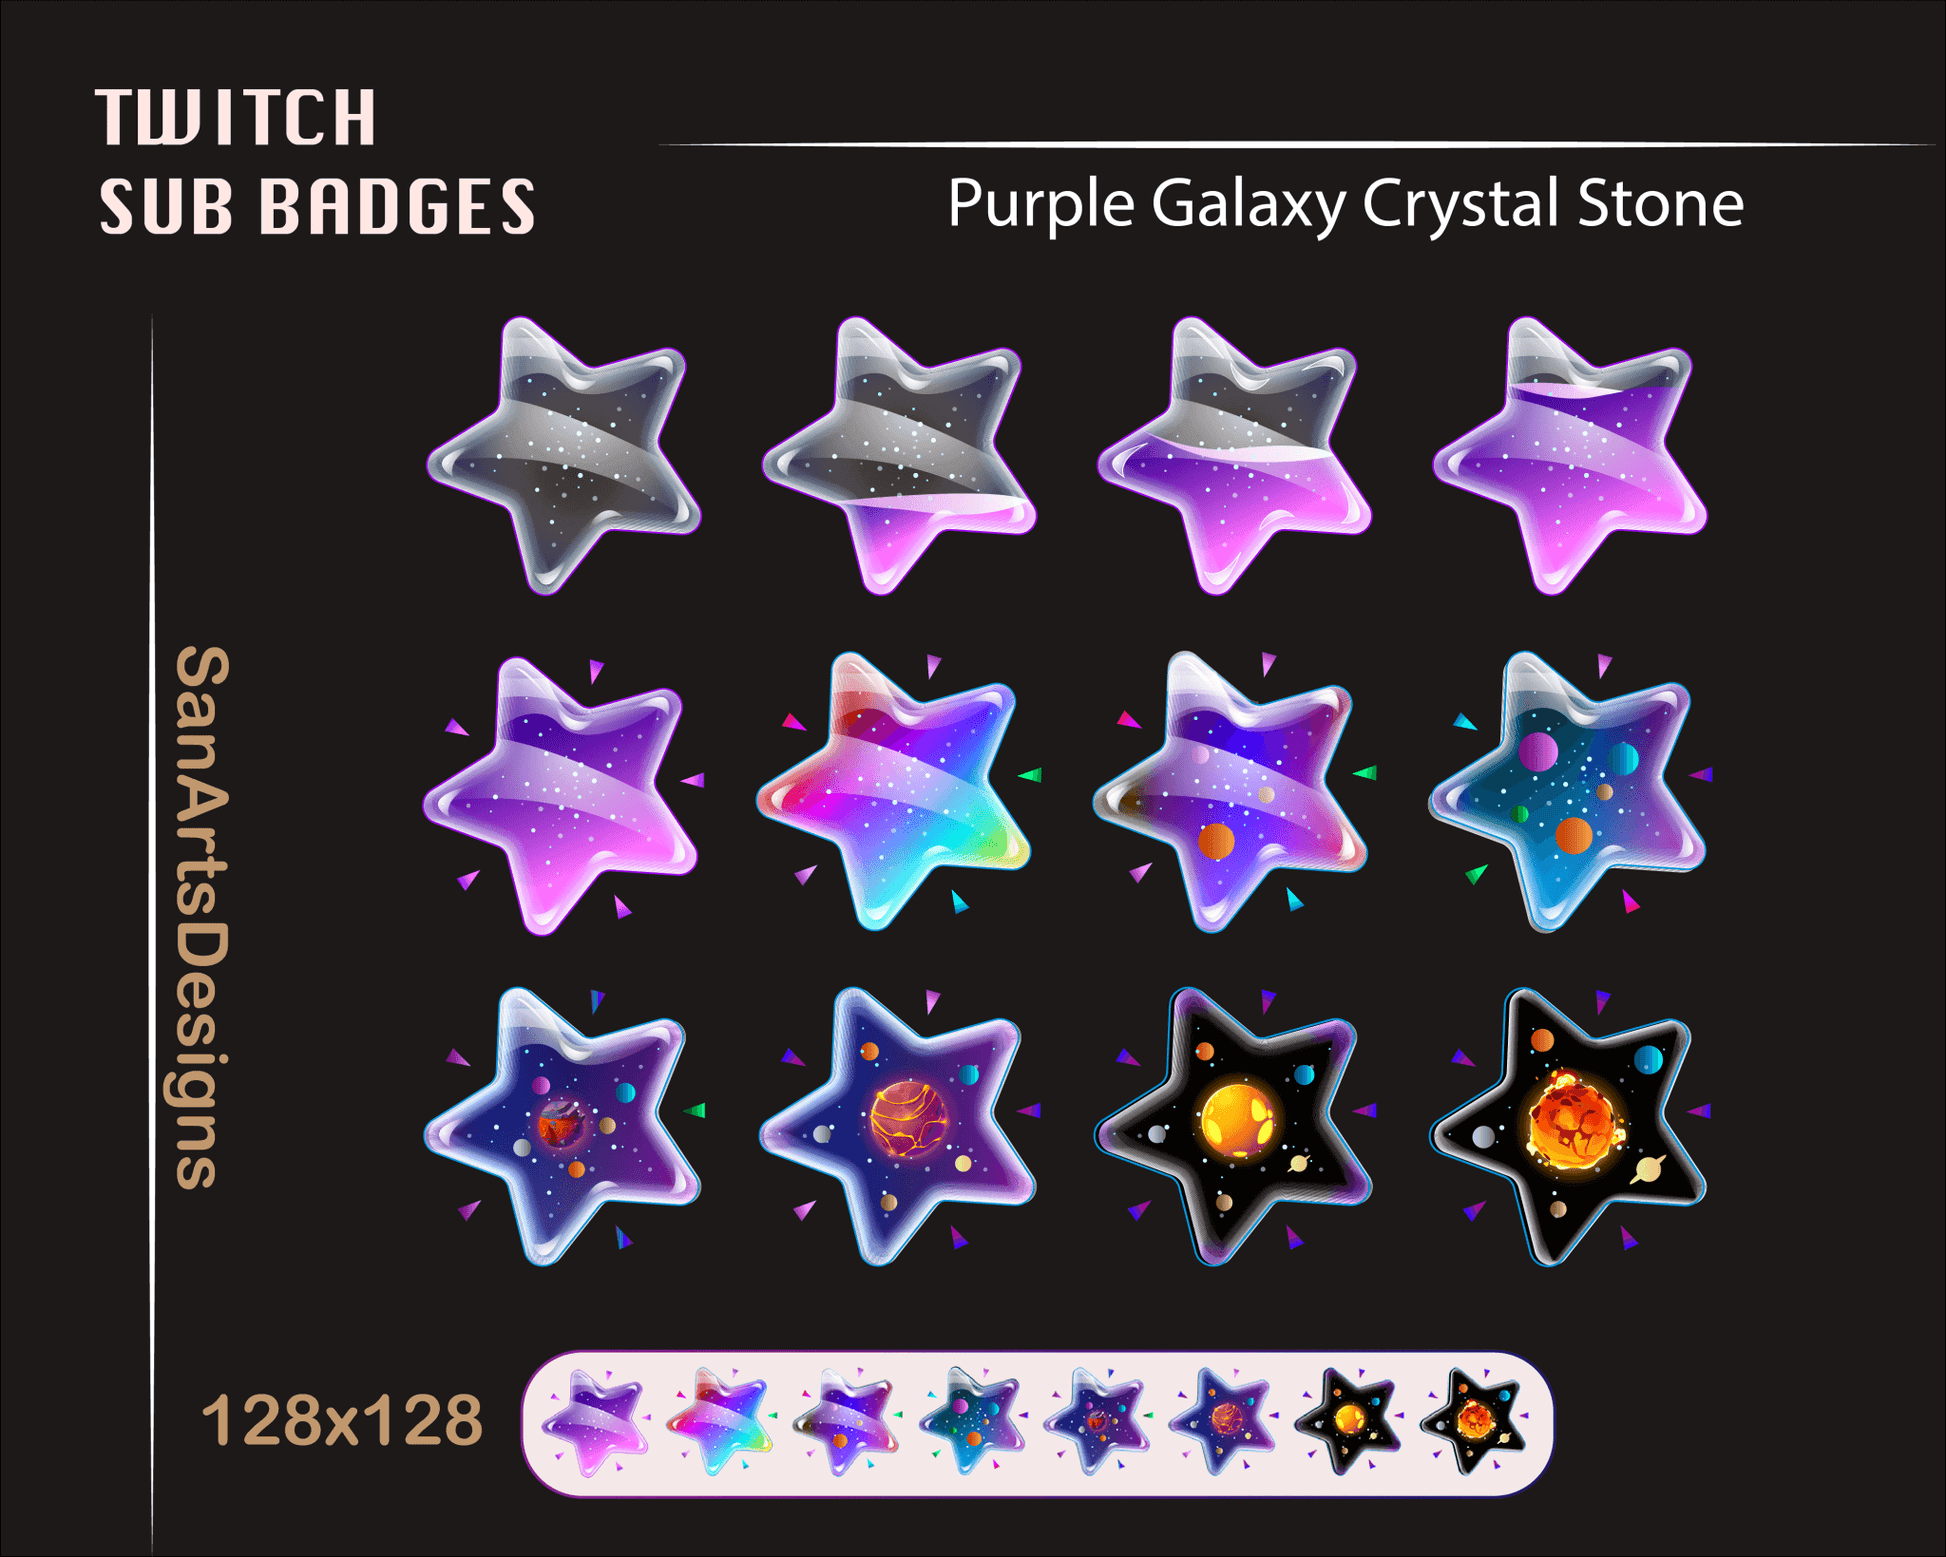 Galaxy Star Bottle Twitch Sub Badges - Badges - Stream K-Arts